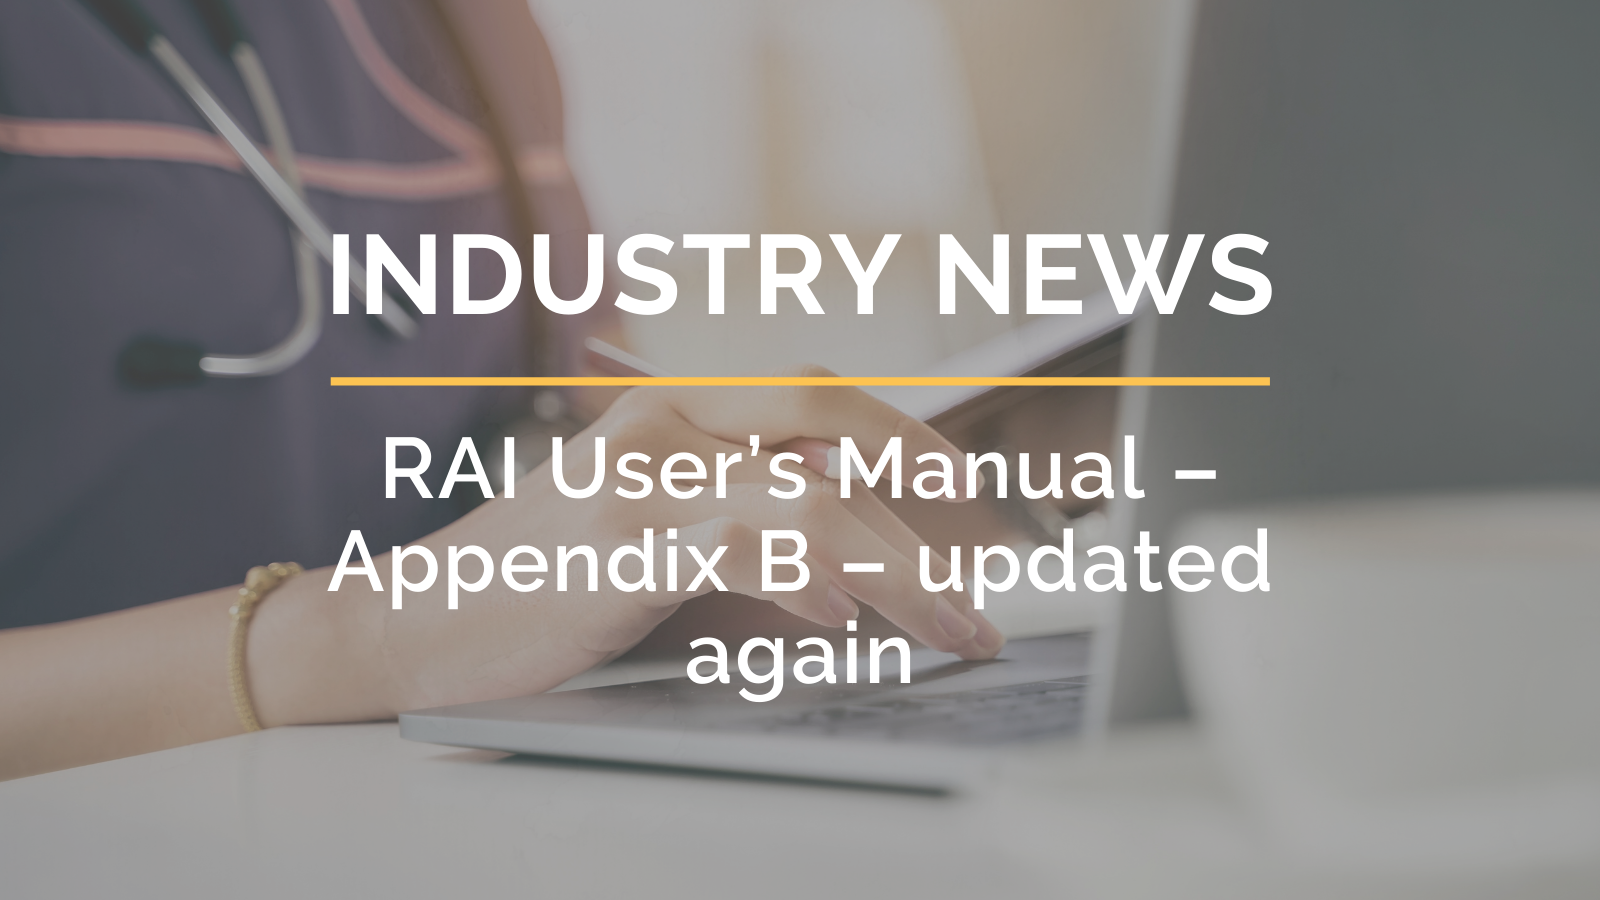 RAI User’s Manual Appendix B updated again Simple, a Netsmart